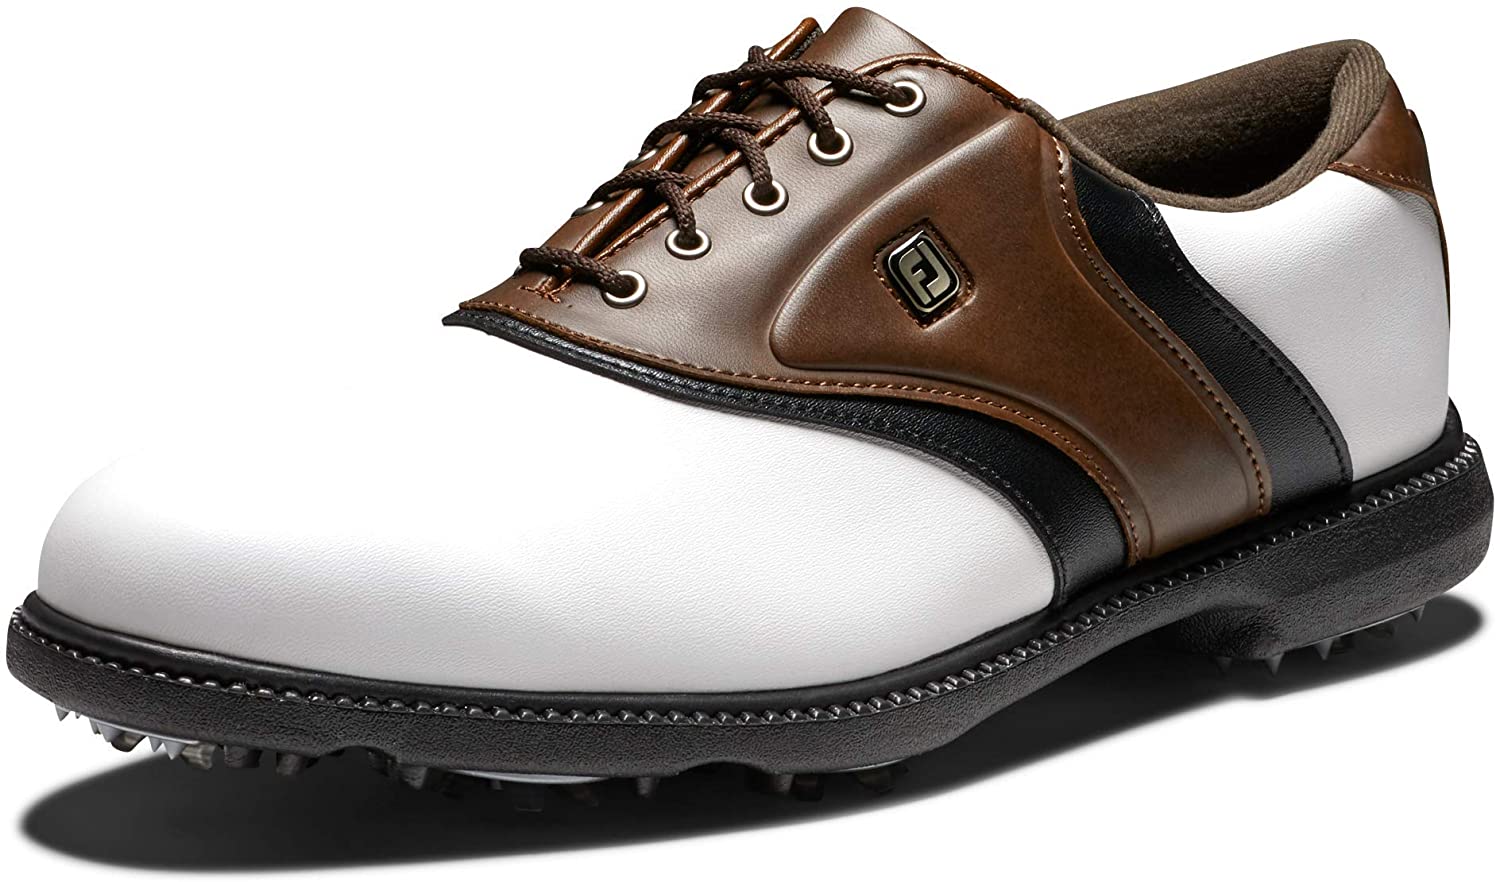 FootJoy FJ Originals Golf Shoes (White/Brown, 10) - image 1 of 7